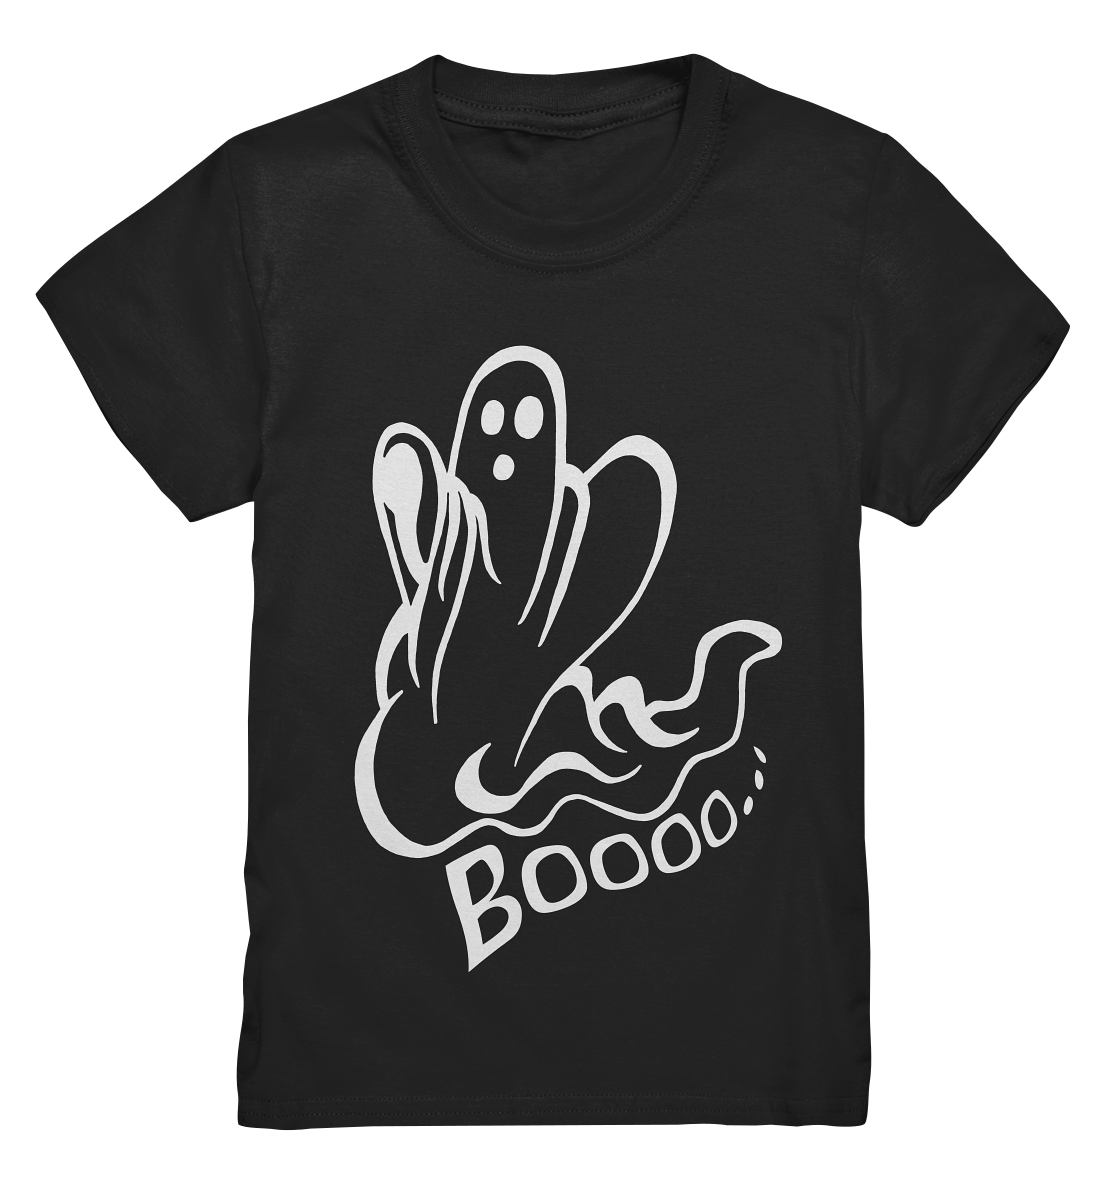 Booo... großes Gespenst. Geist Halloween - Kids Premium Shirt